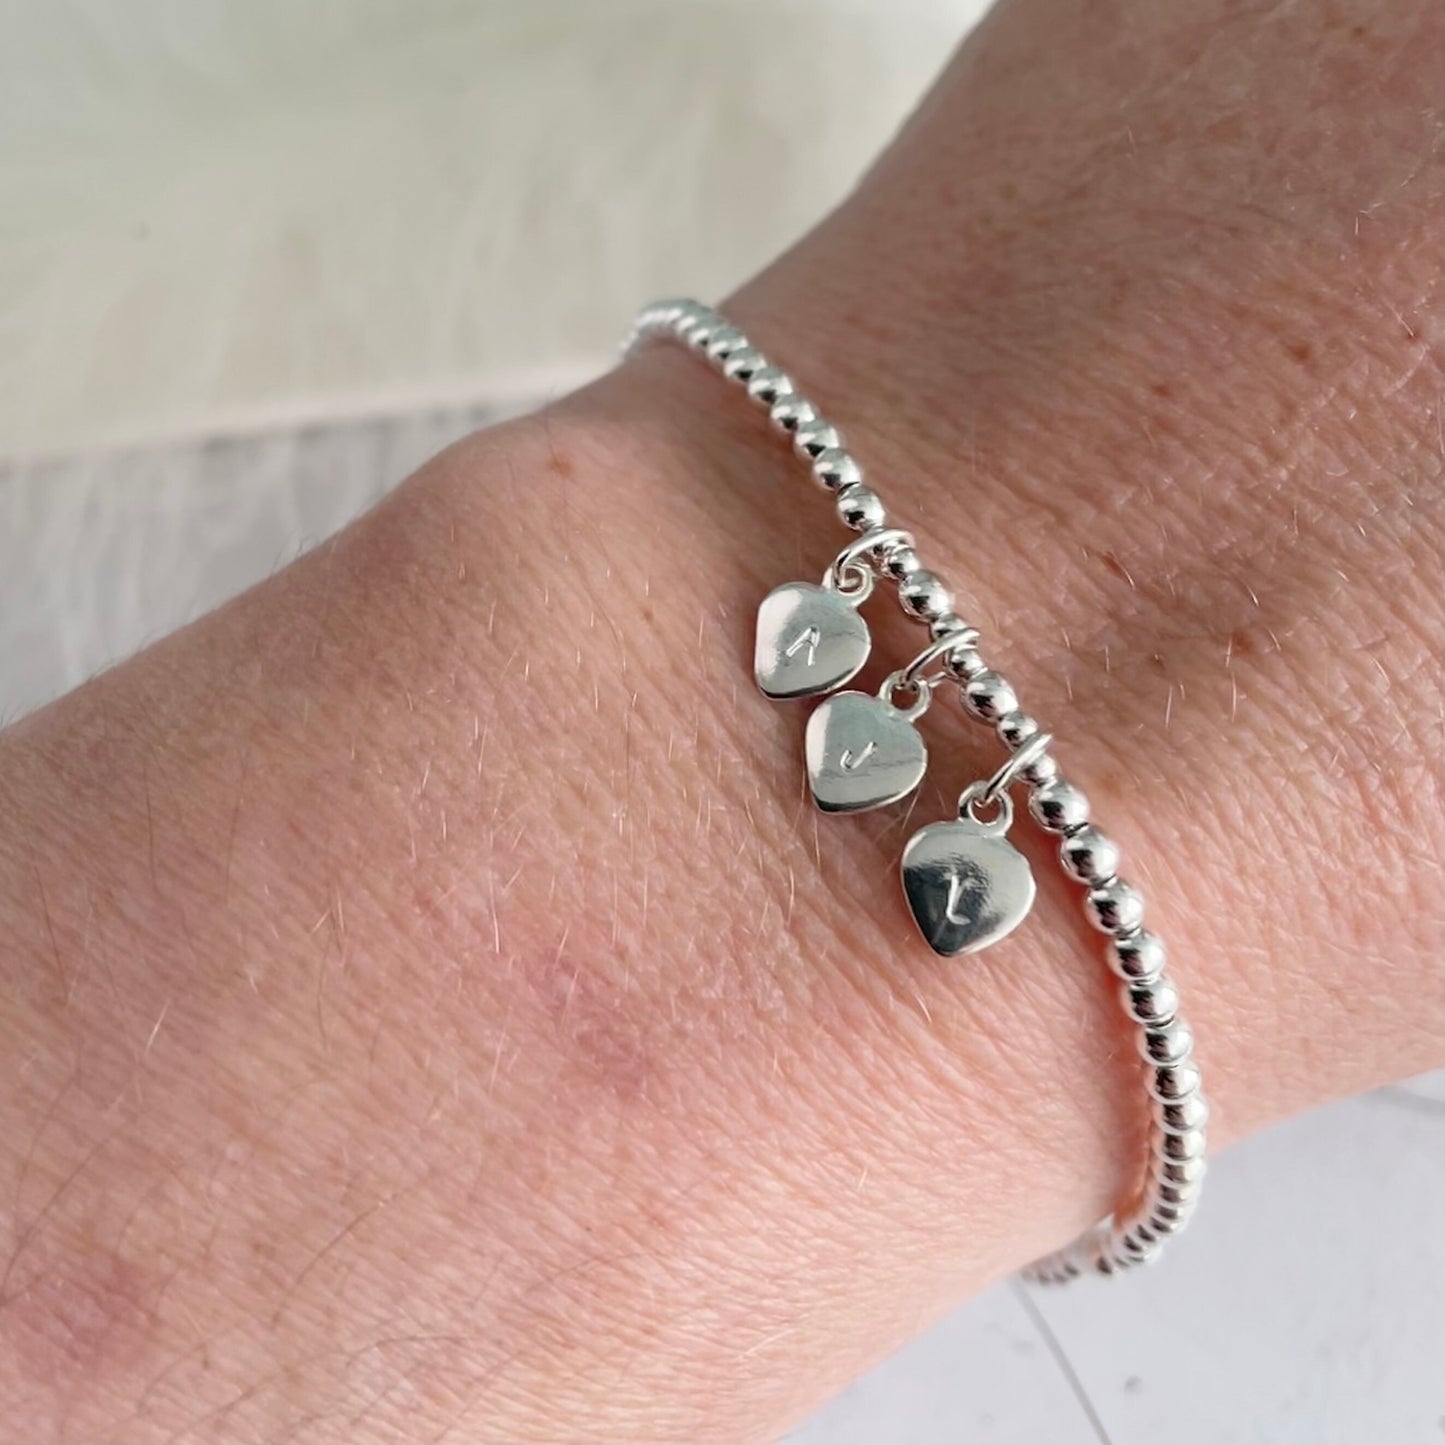 Initial Charm Personalised Bracelet, Sterling Silver bracelet